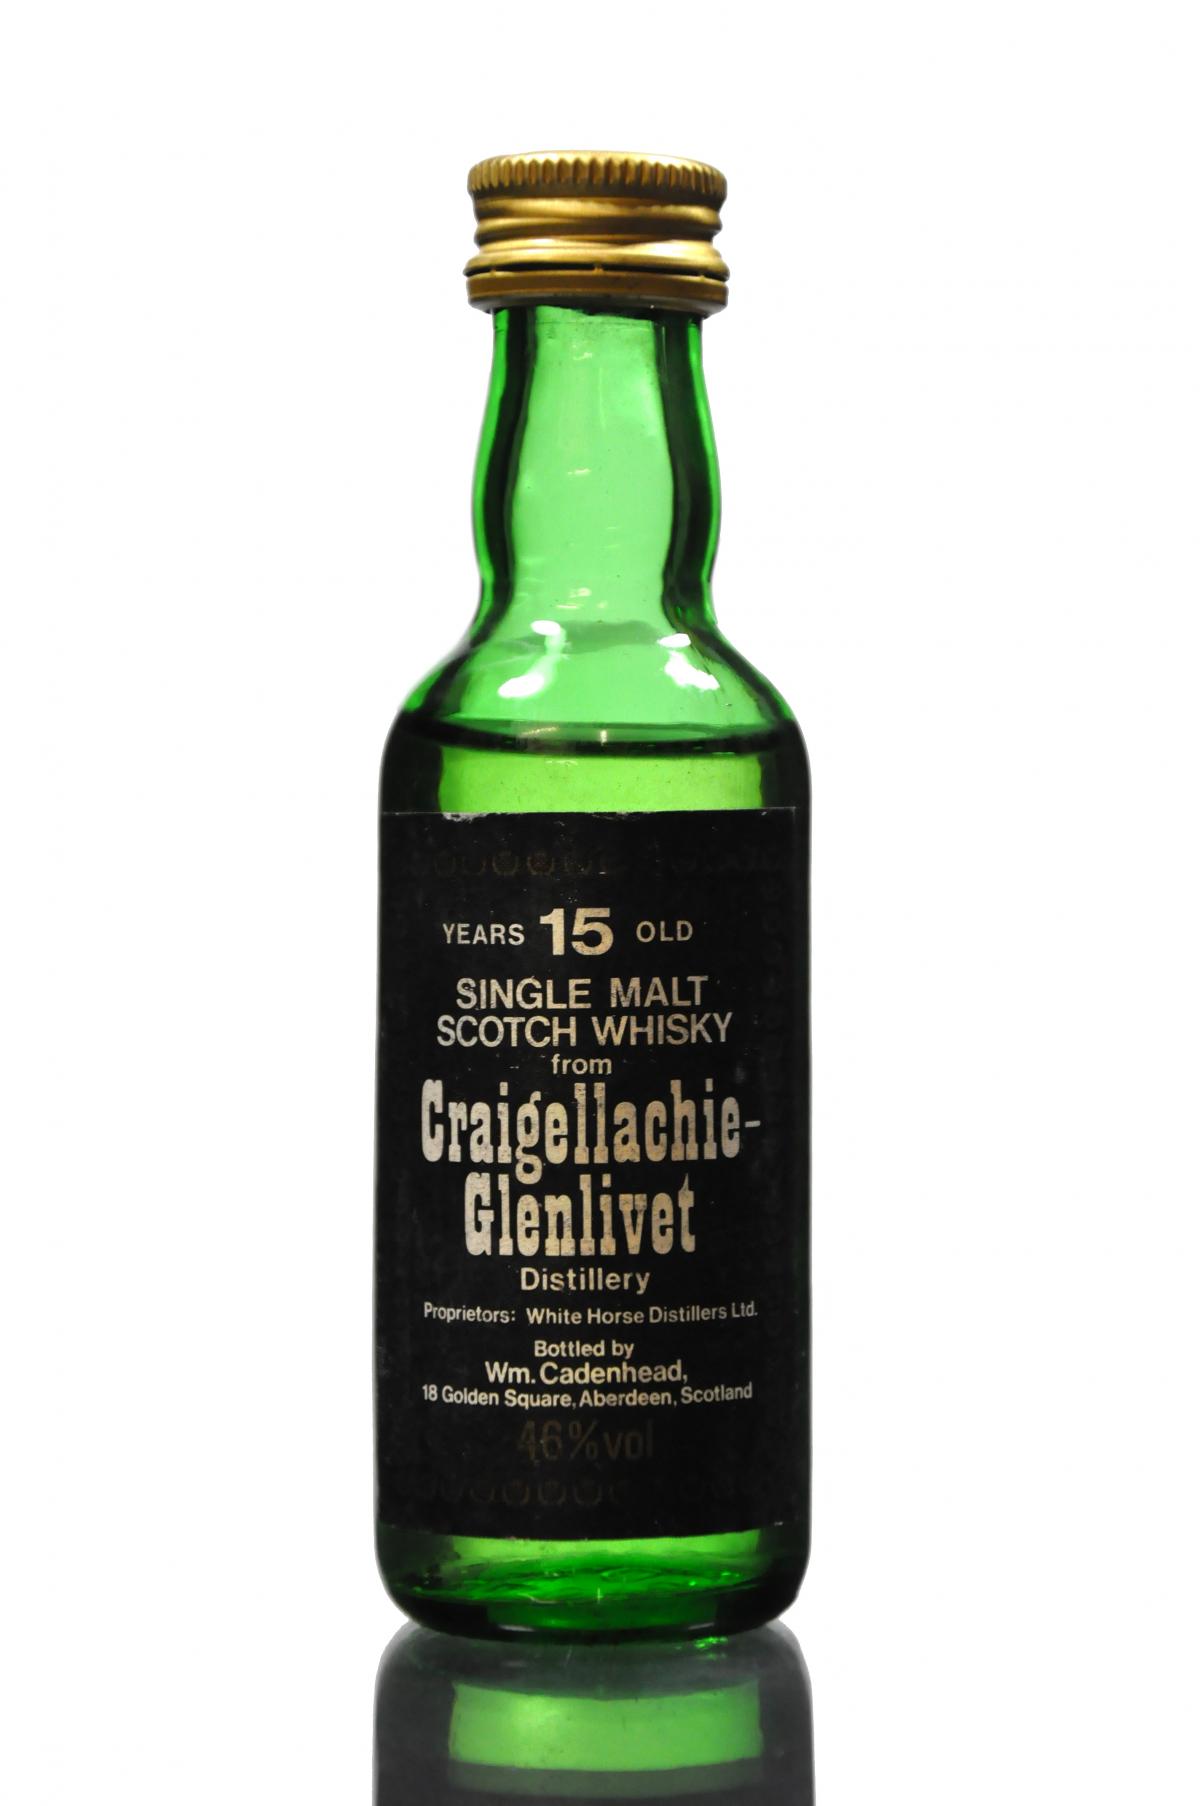 Craigellachie-Glenlivet 15 Year Old - Cadenhead Miniature